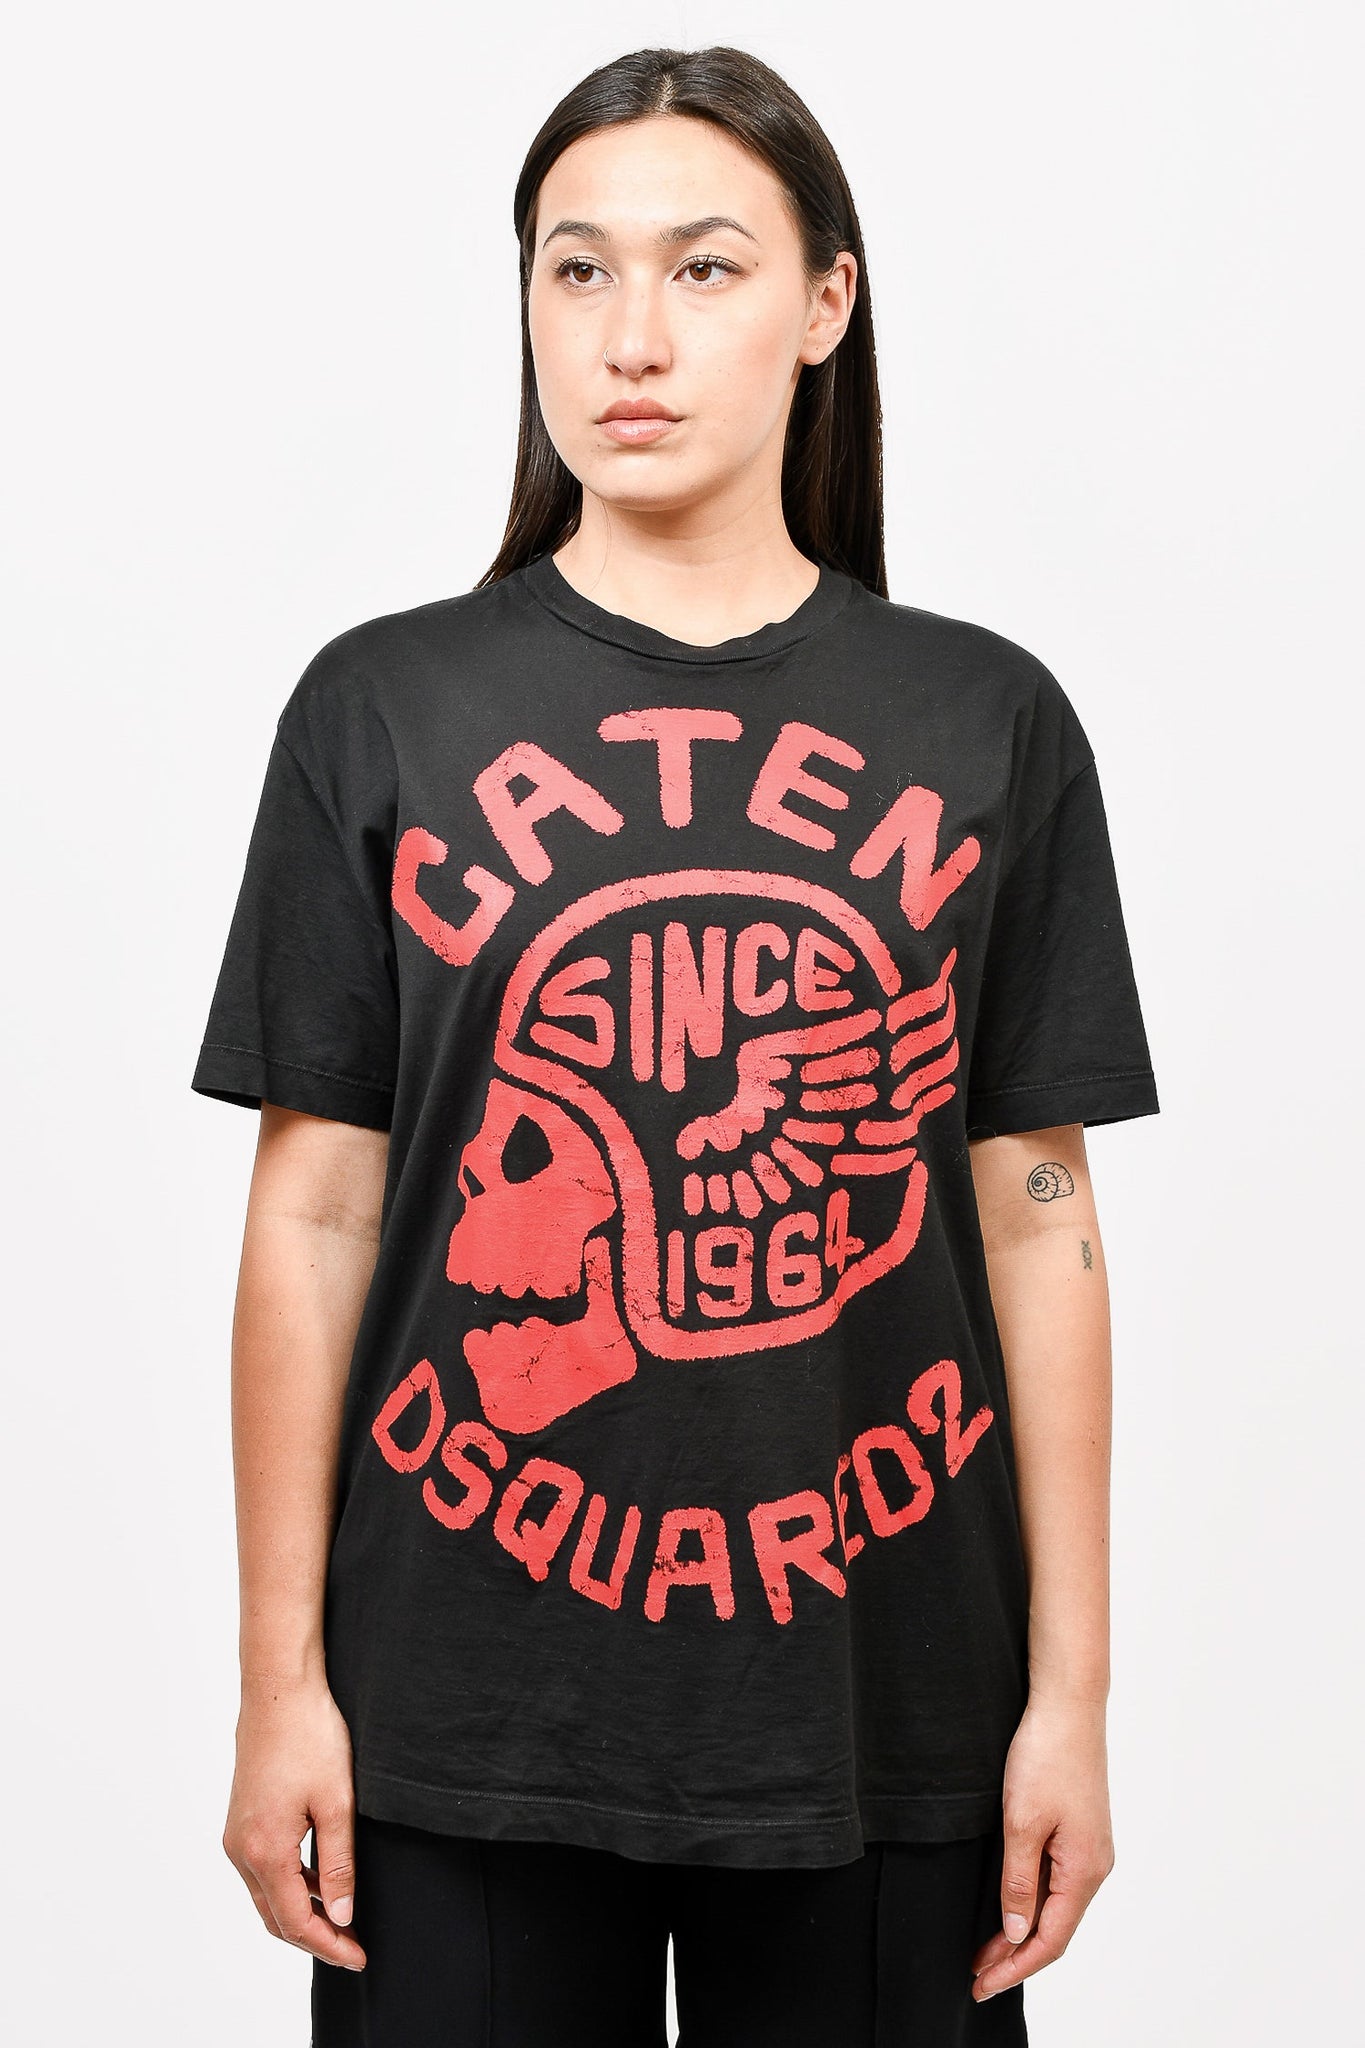 DSquared2 Black/Red 'Gaten' Printed T-Shirt Size XXL